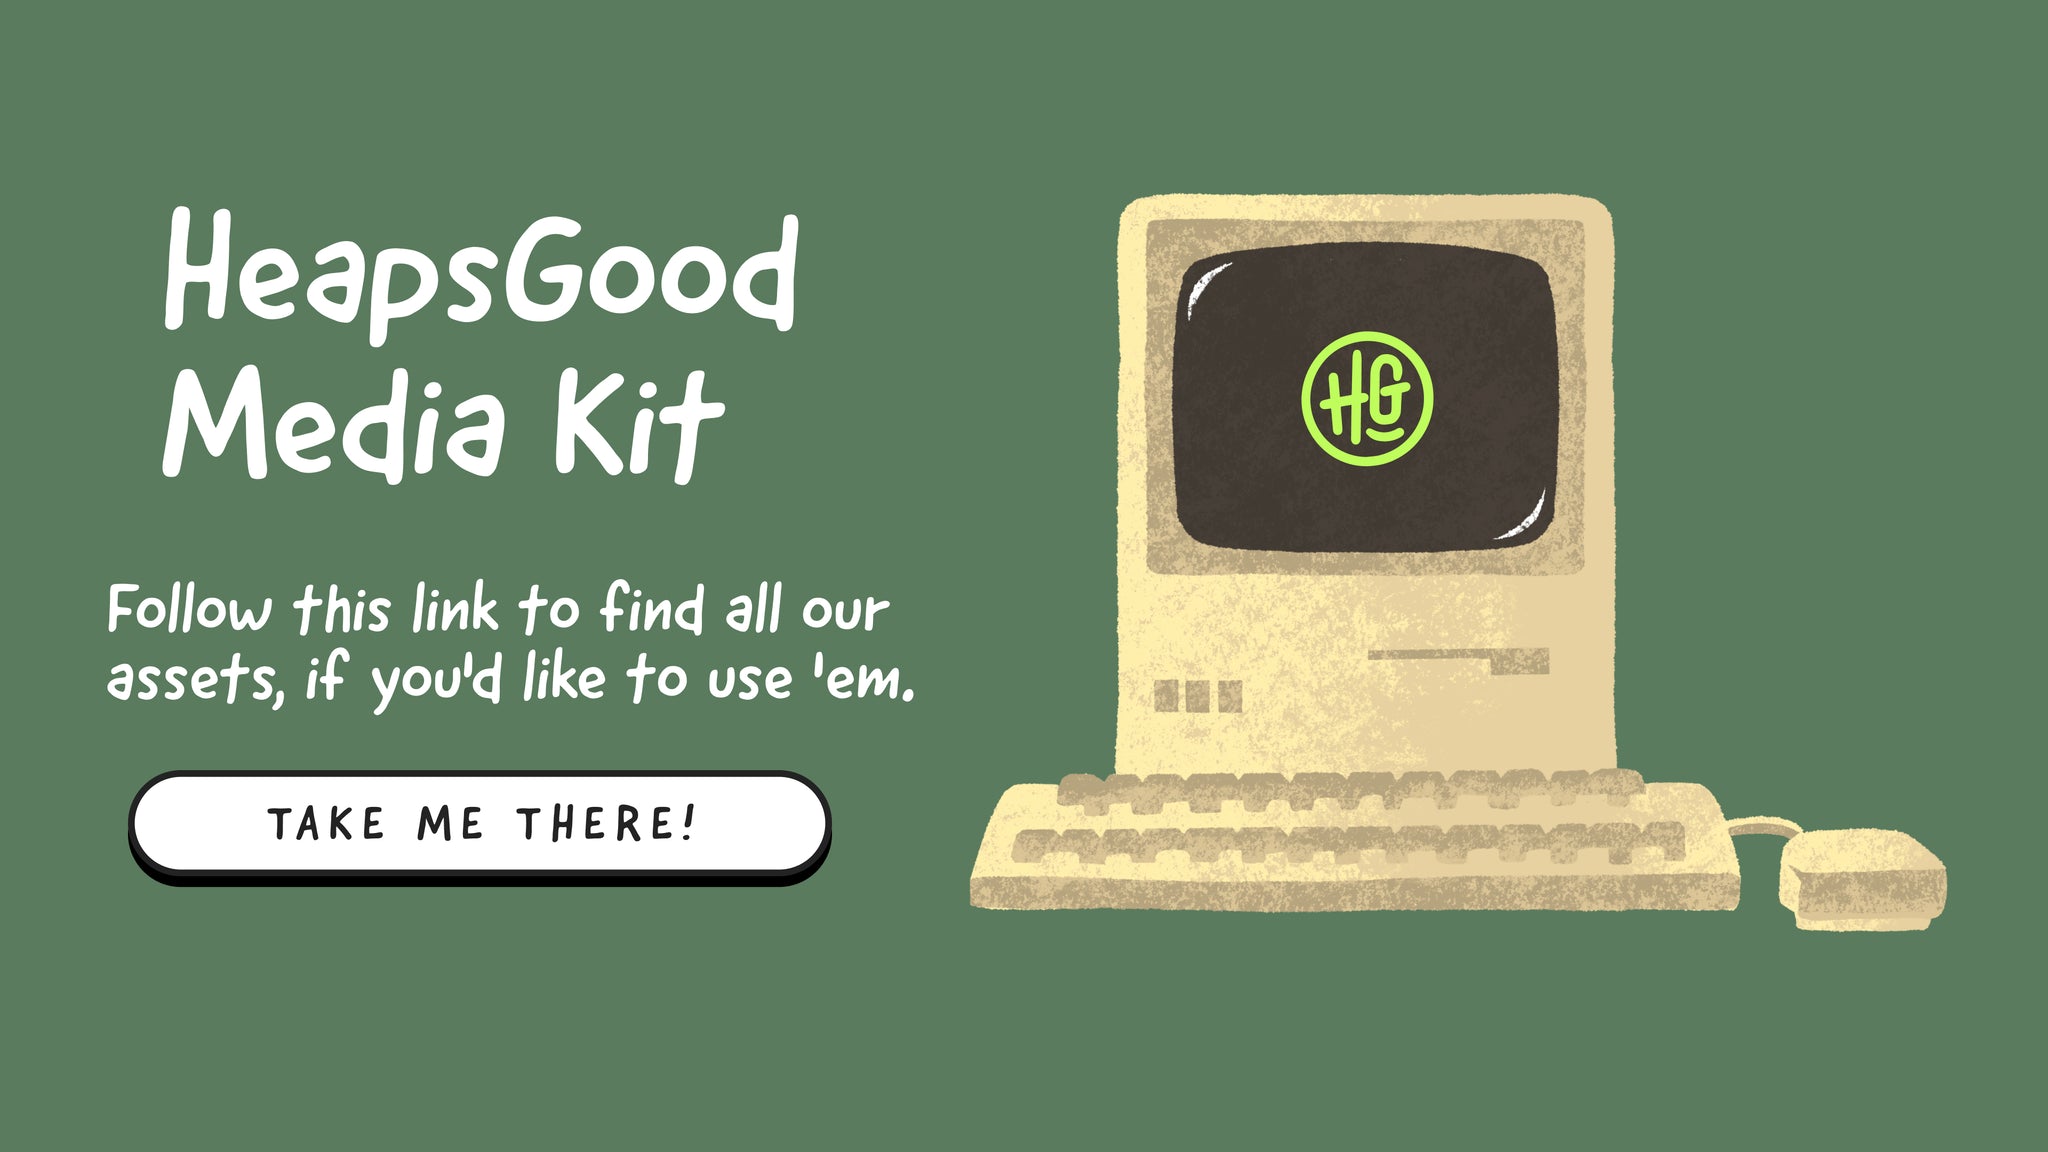 HeapsGood Packaging Media Kit